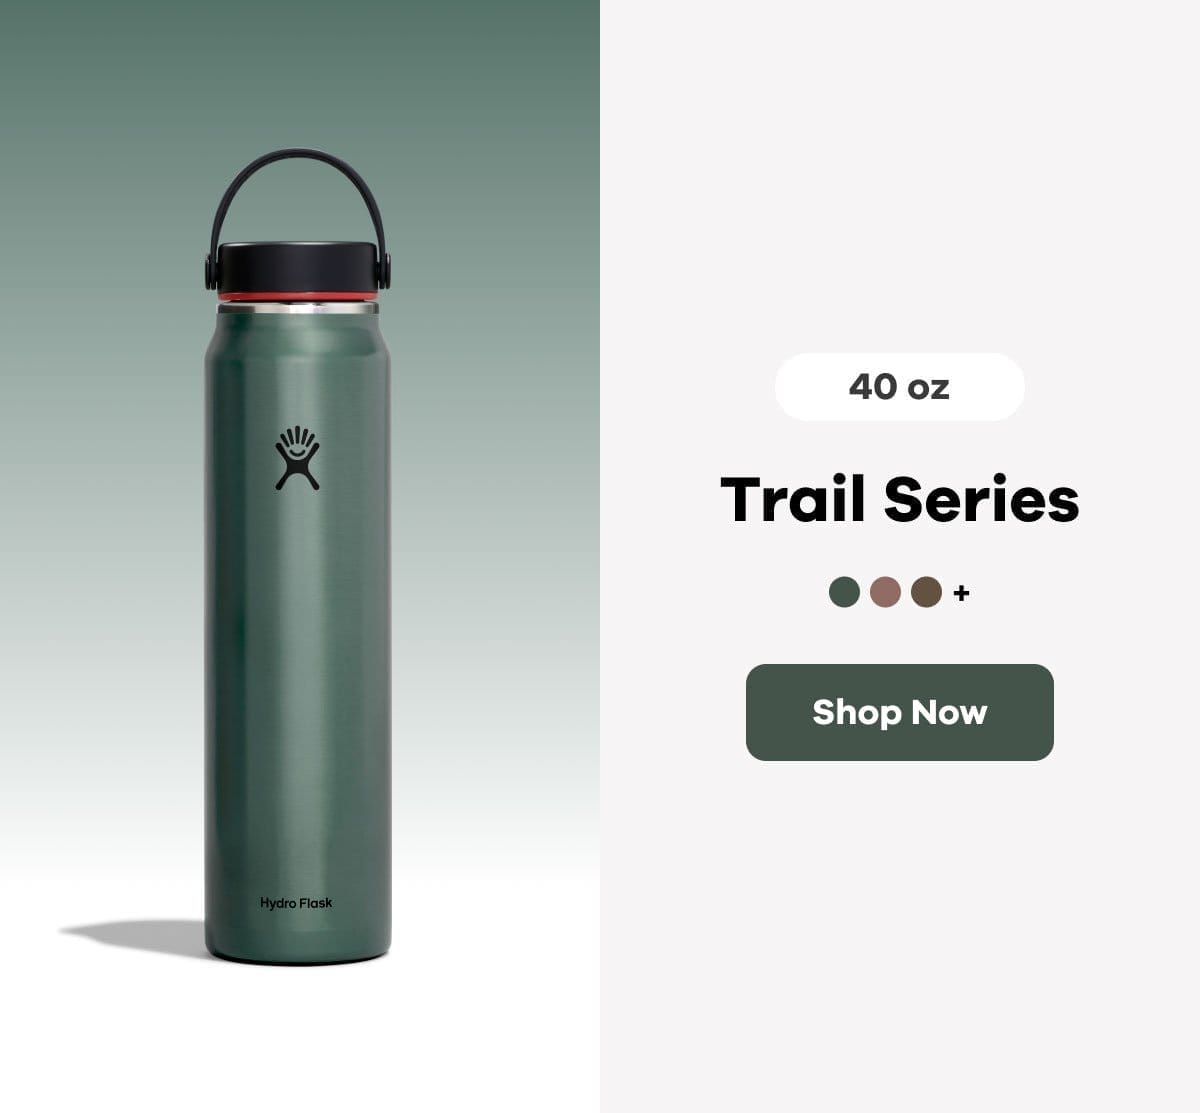 40 oz Trail Series | Shop Now